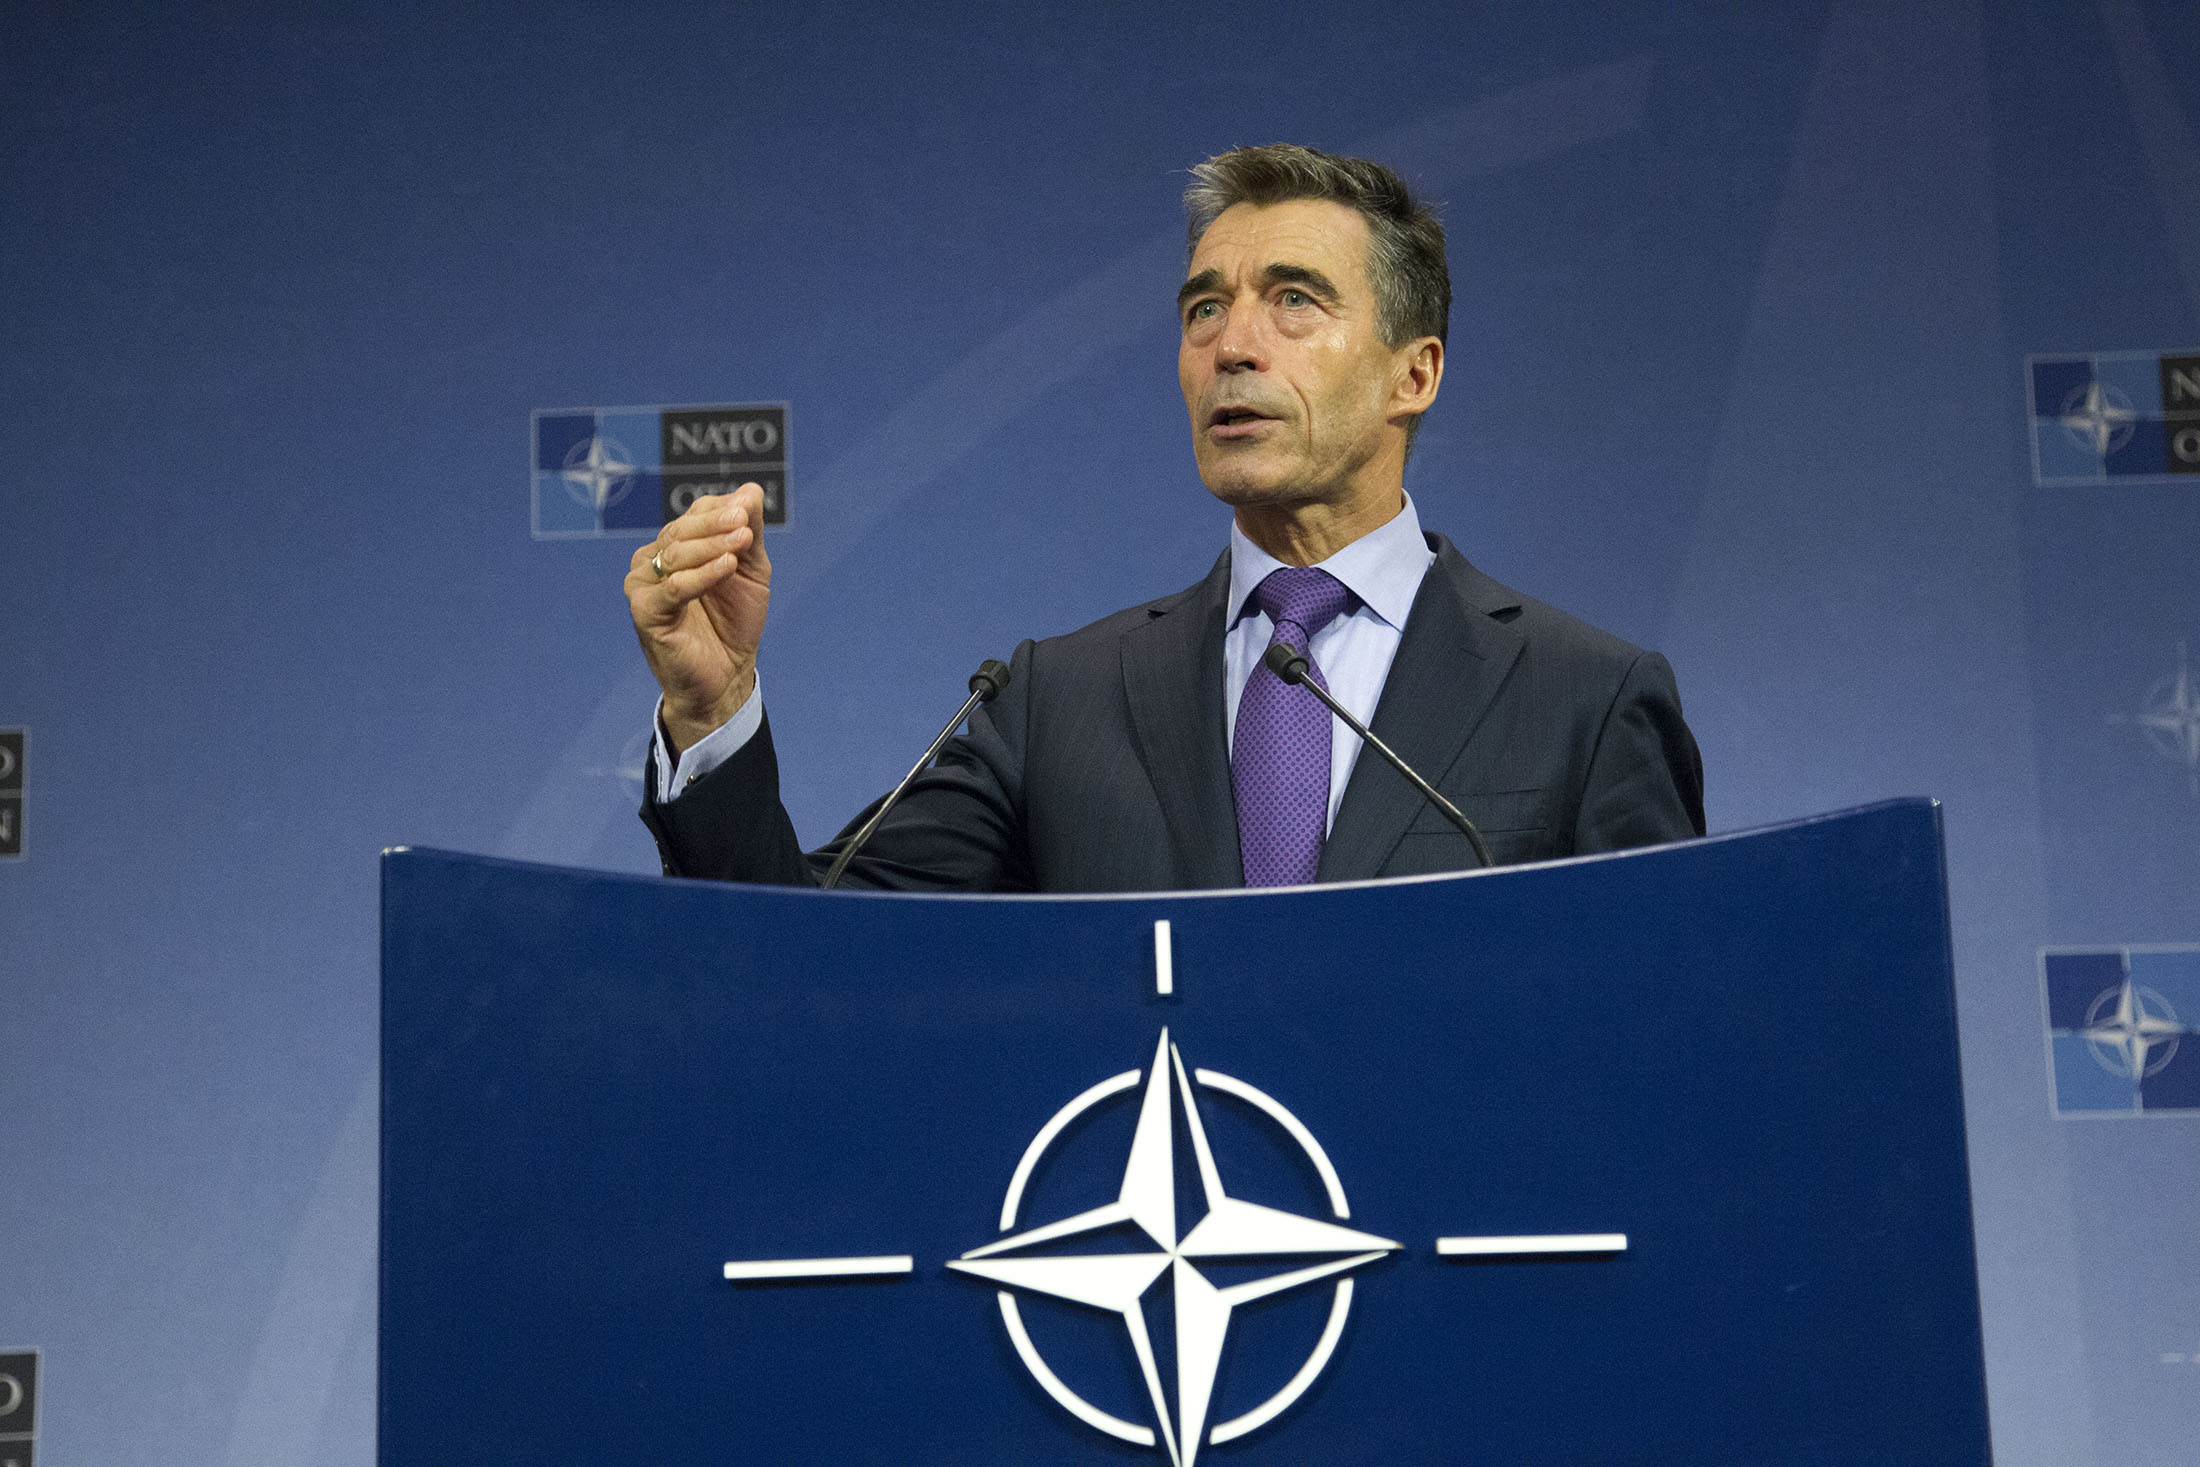 NATO Secretary General Anders Fogh Rasmussen, October 23, 2013